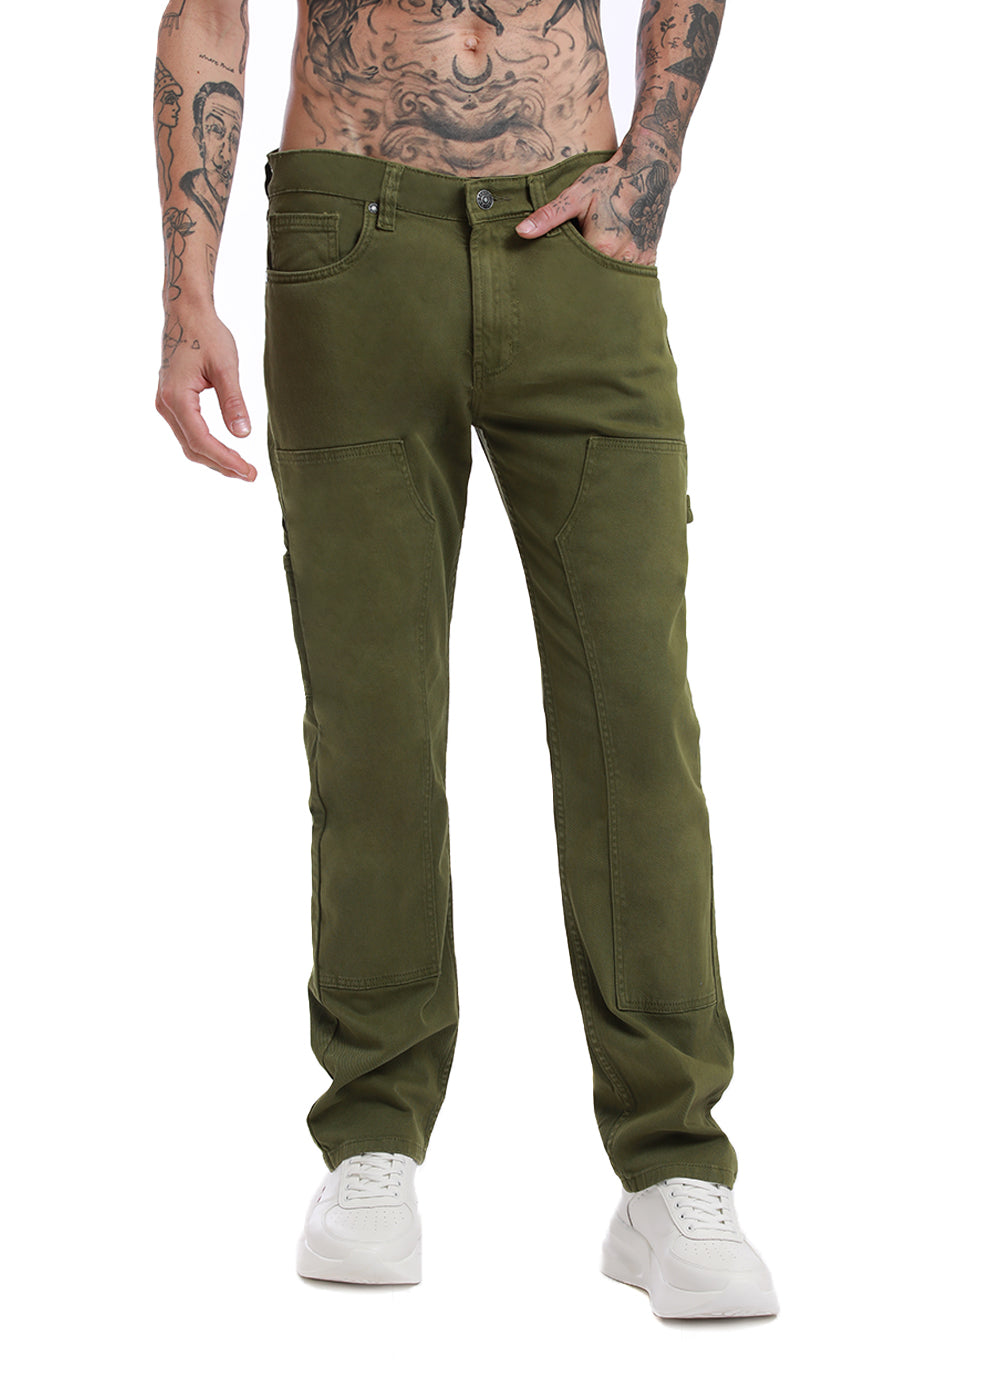 Women's Green Cargo Pants | Khaki Combat Pants | ASOS